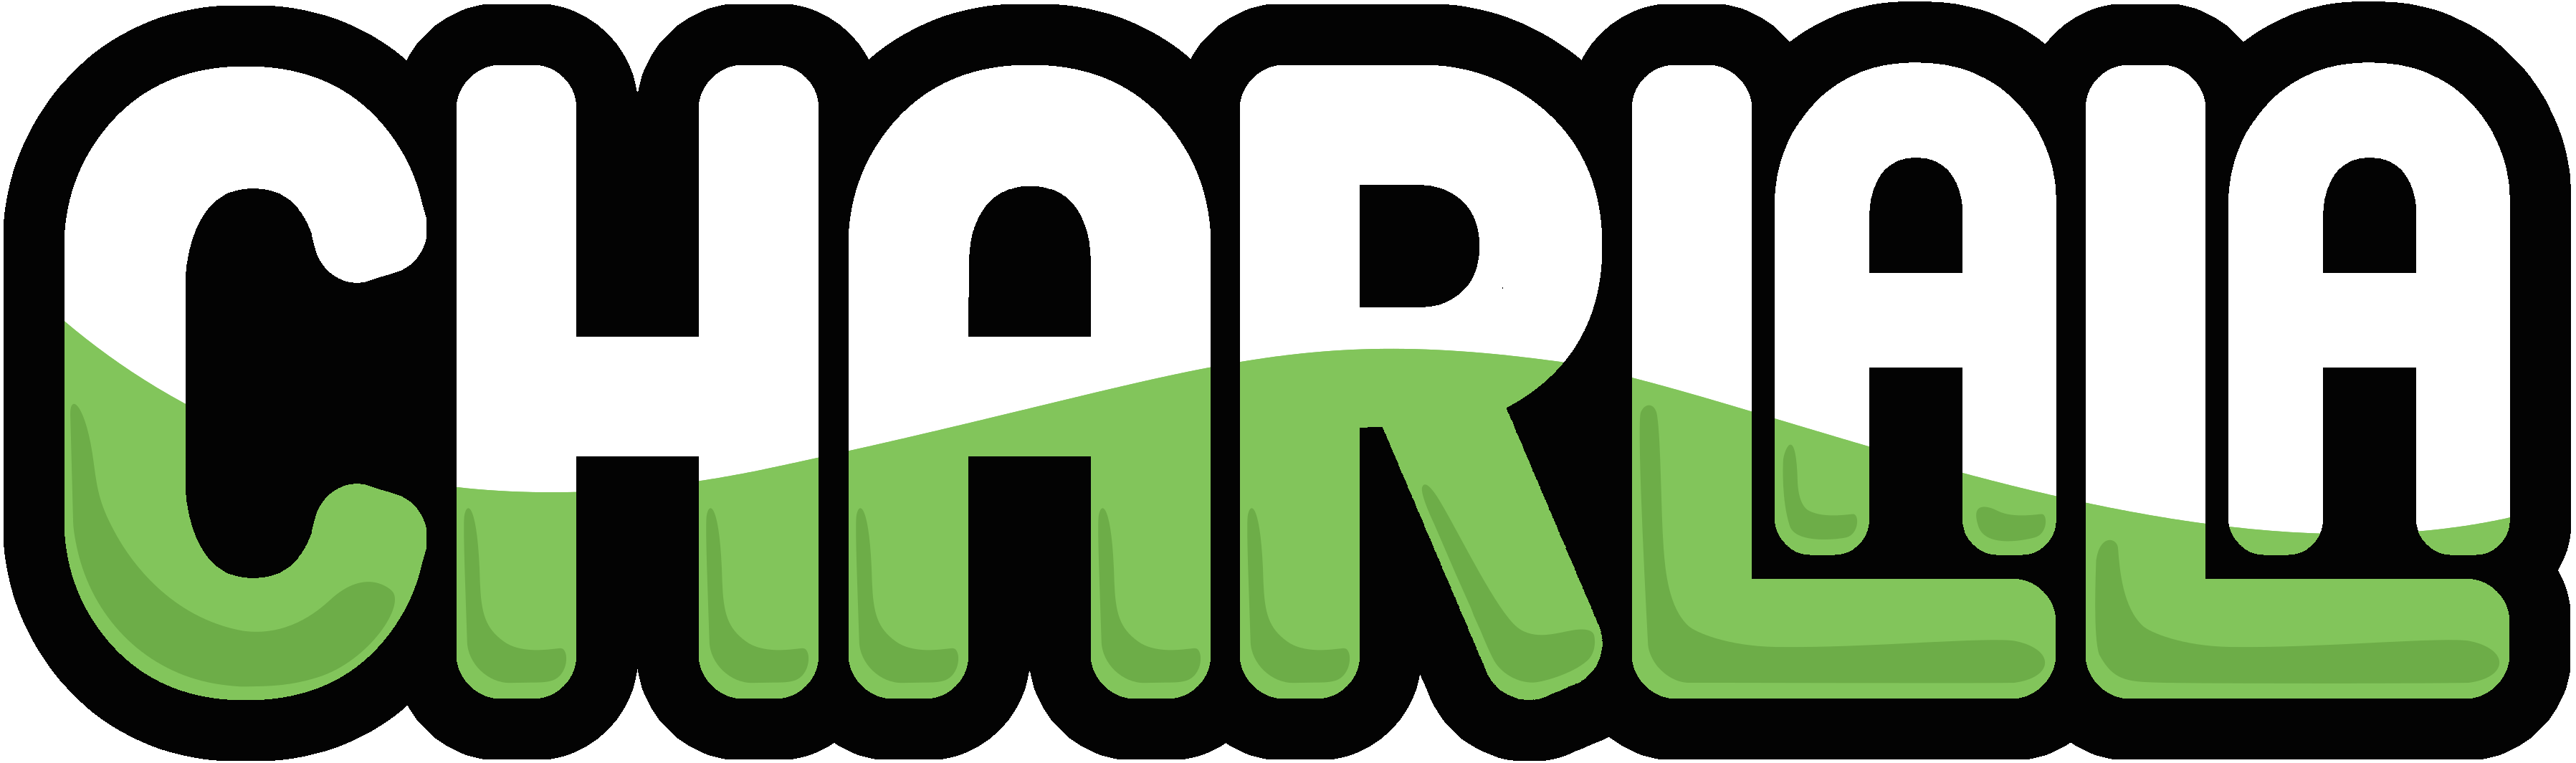 Chrlala logo